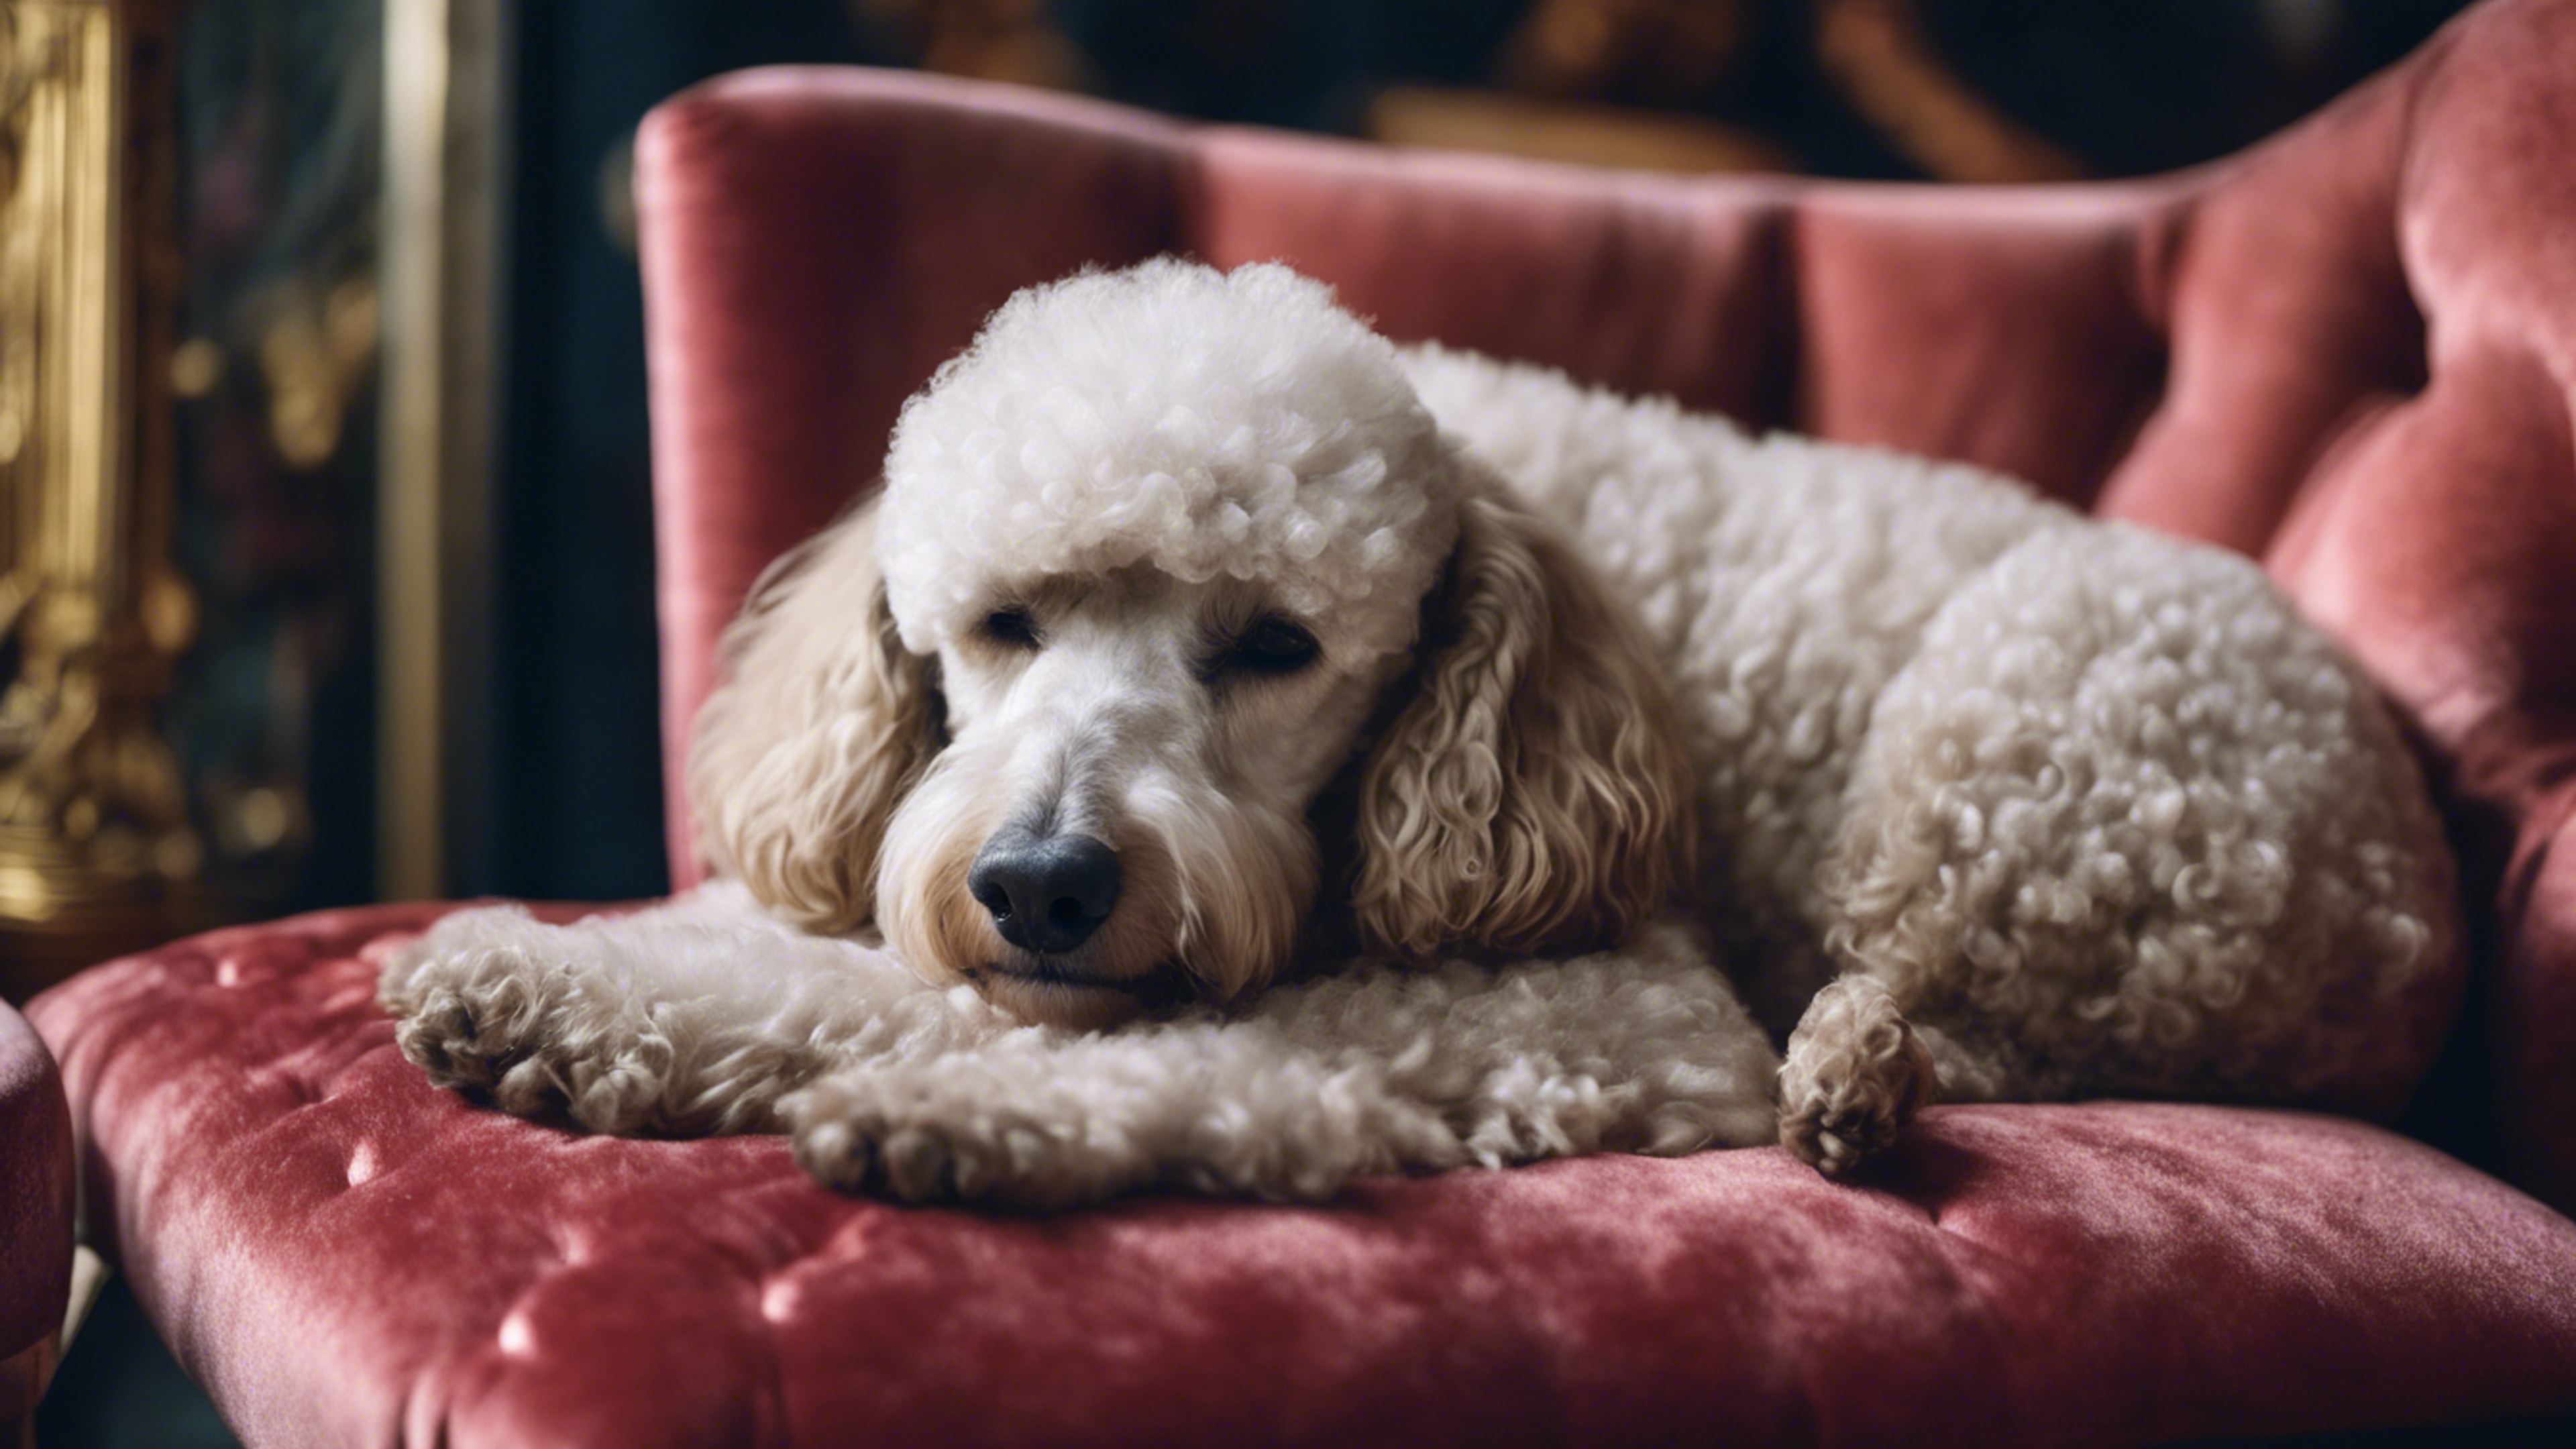 A Poodle sleeping on a velvet cushion in a high fashion Parisian boutique. Tapeta[21e0417617274f73b301]